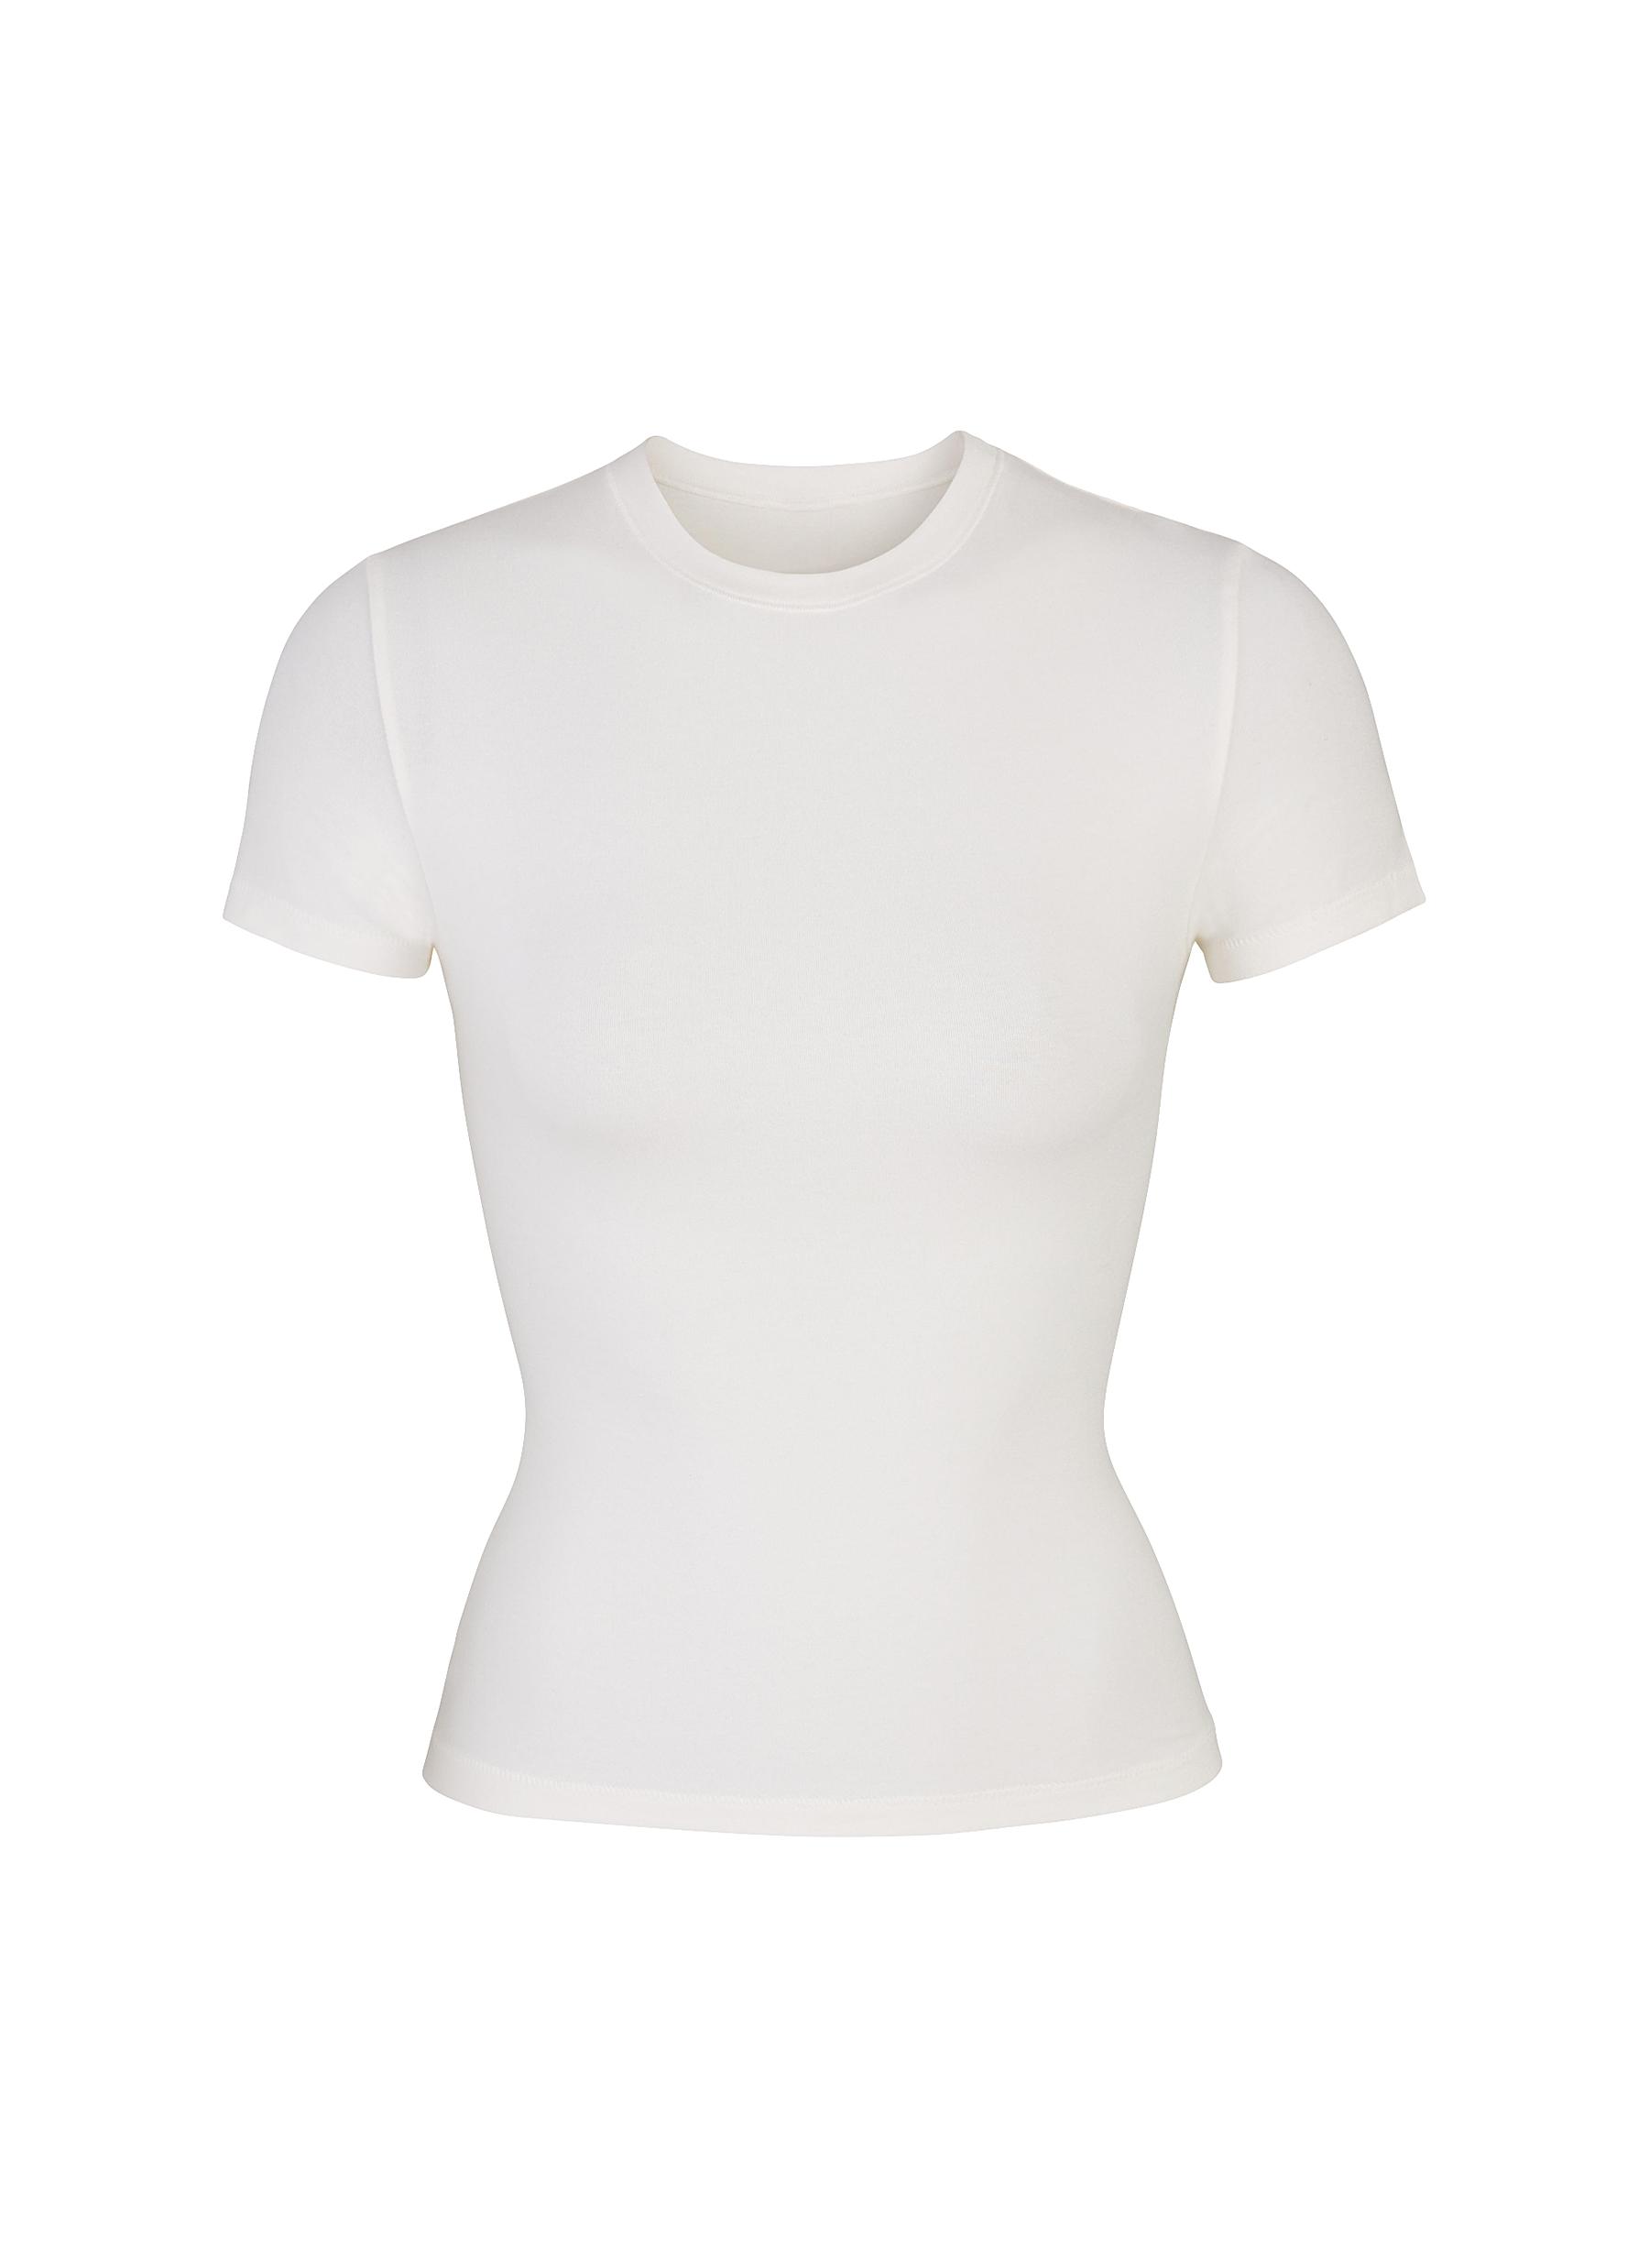 Skims Off-white Cotton Jersey T-shirt in Black